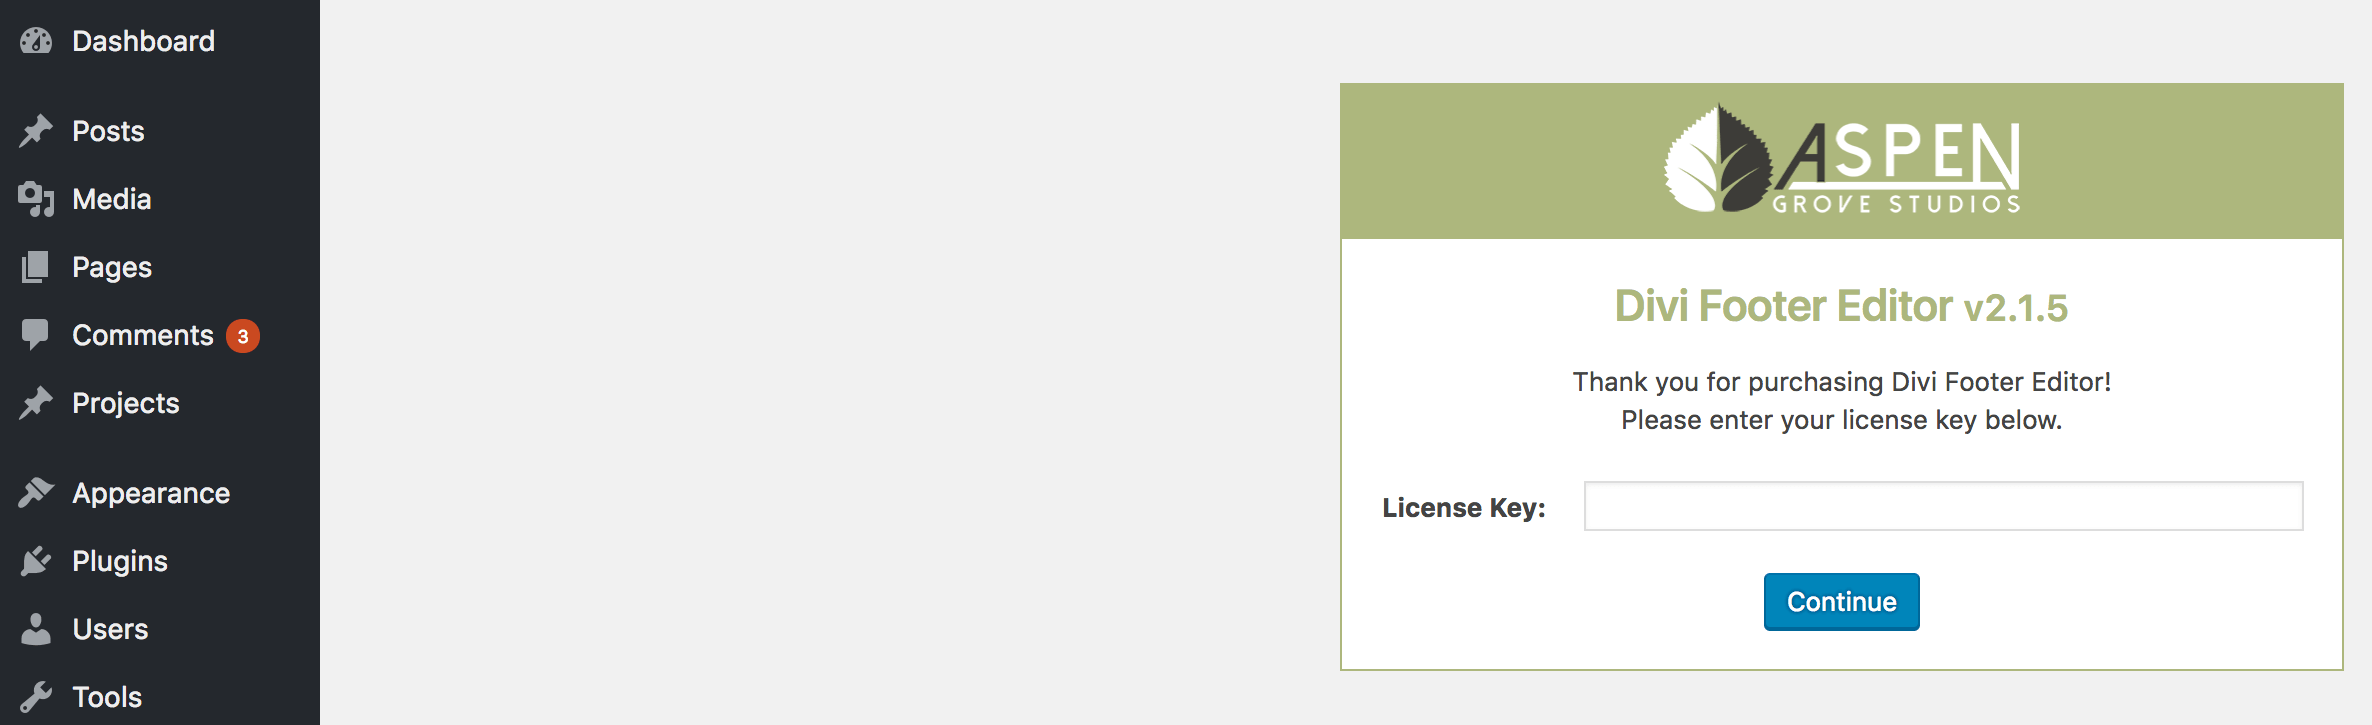 The License Key screen.